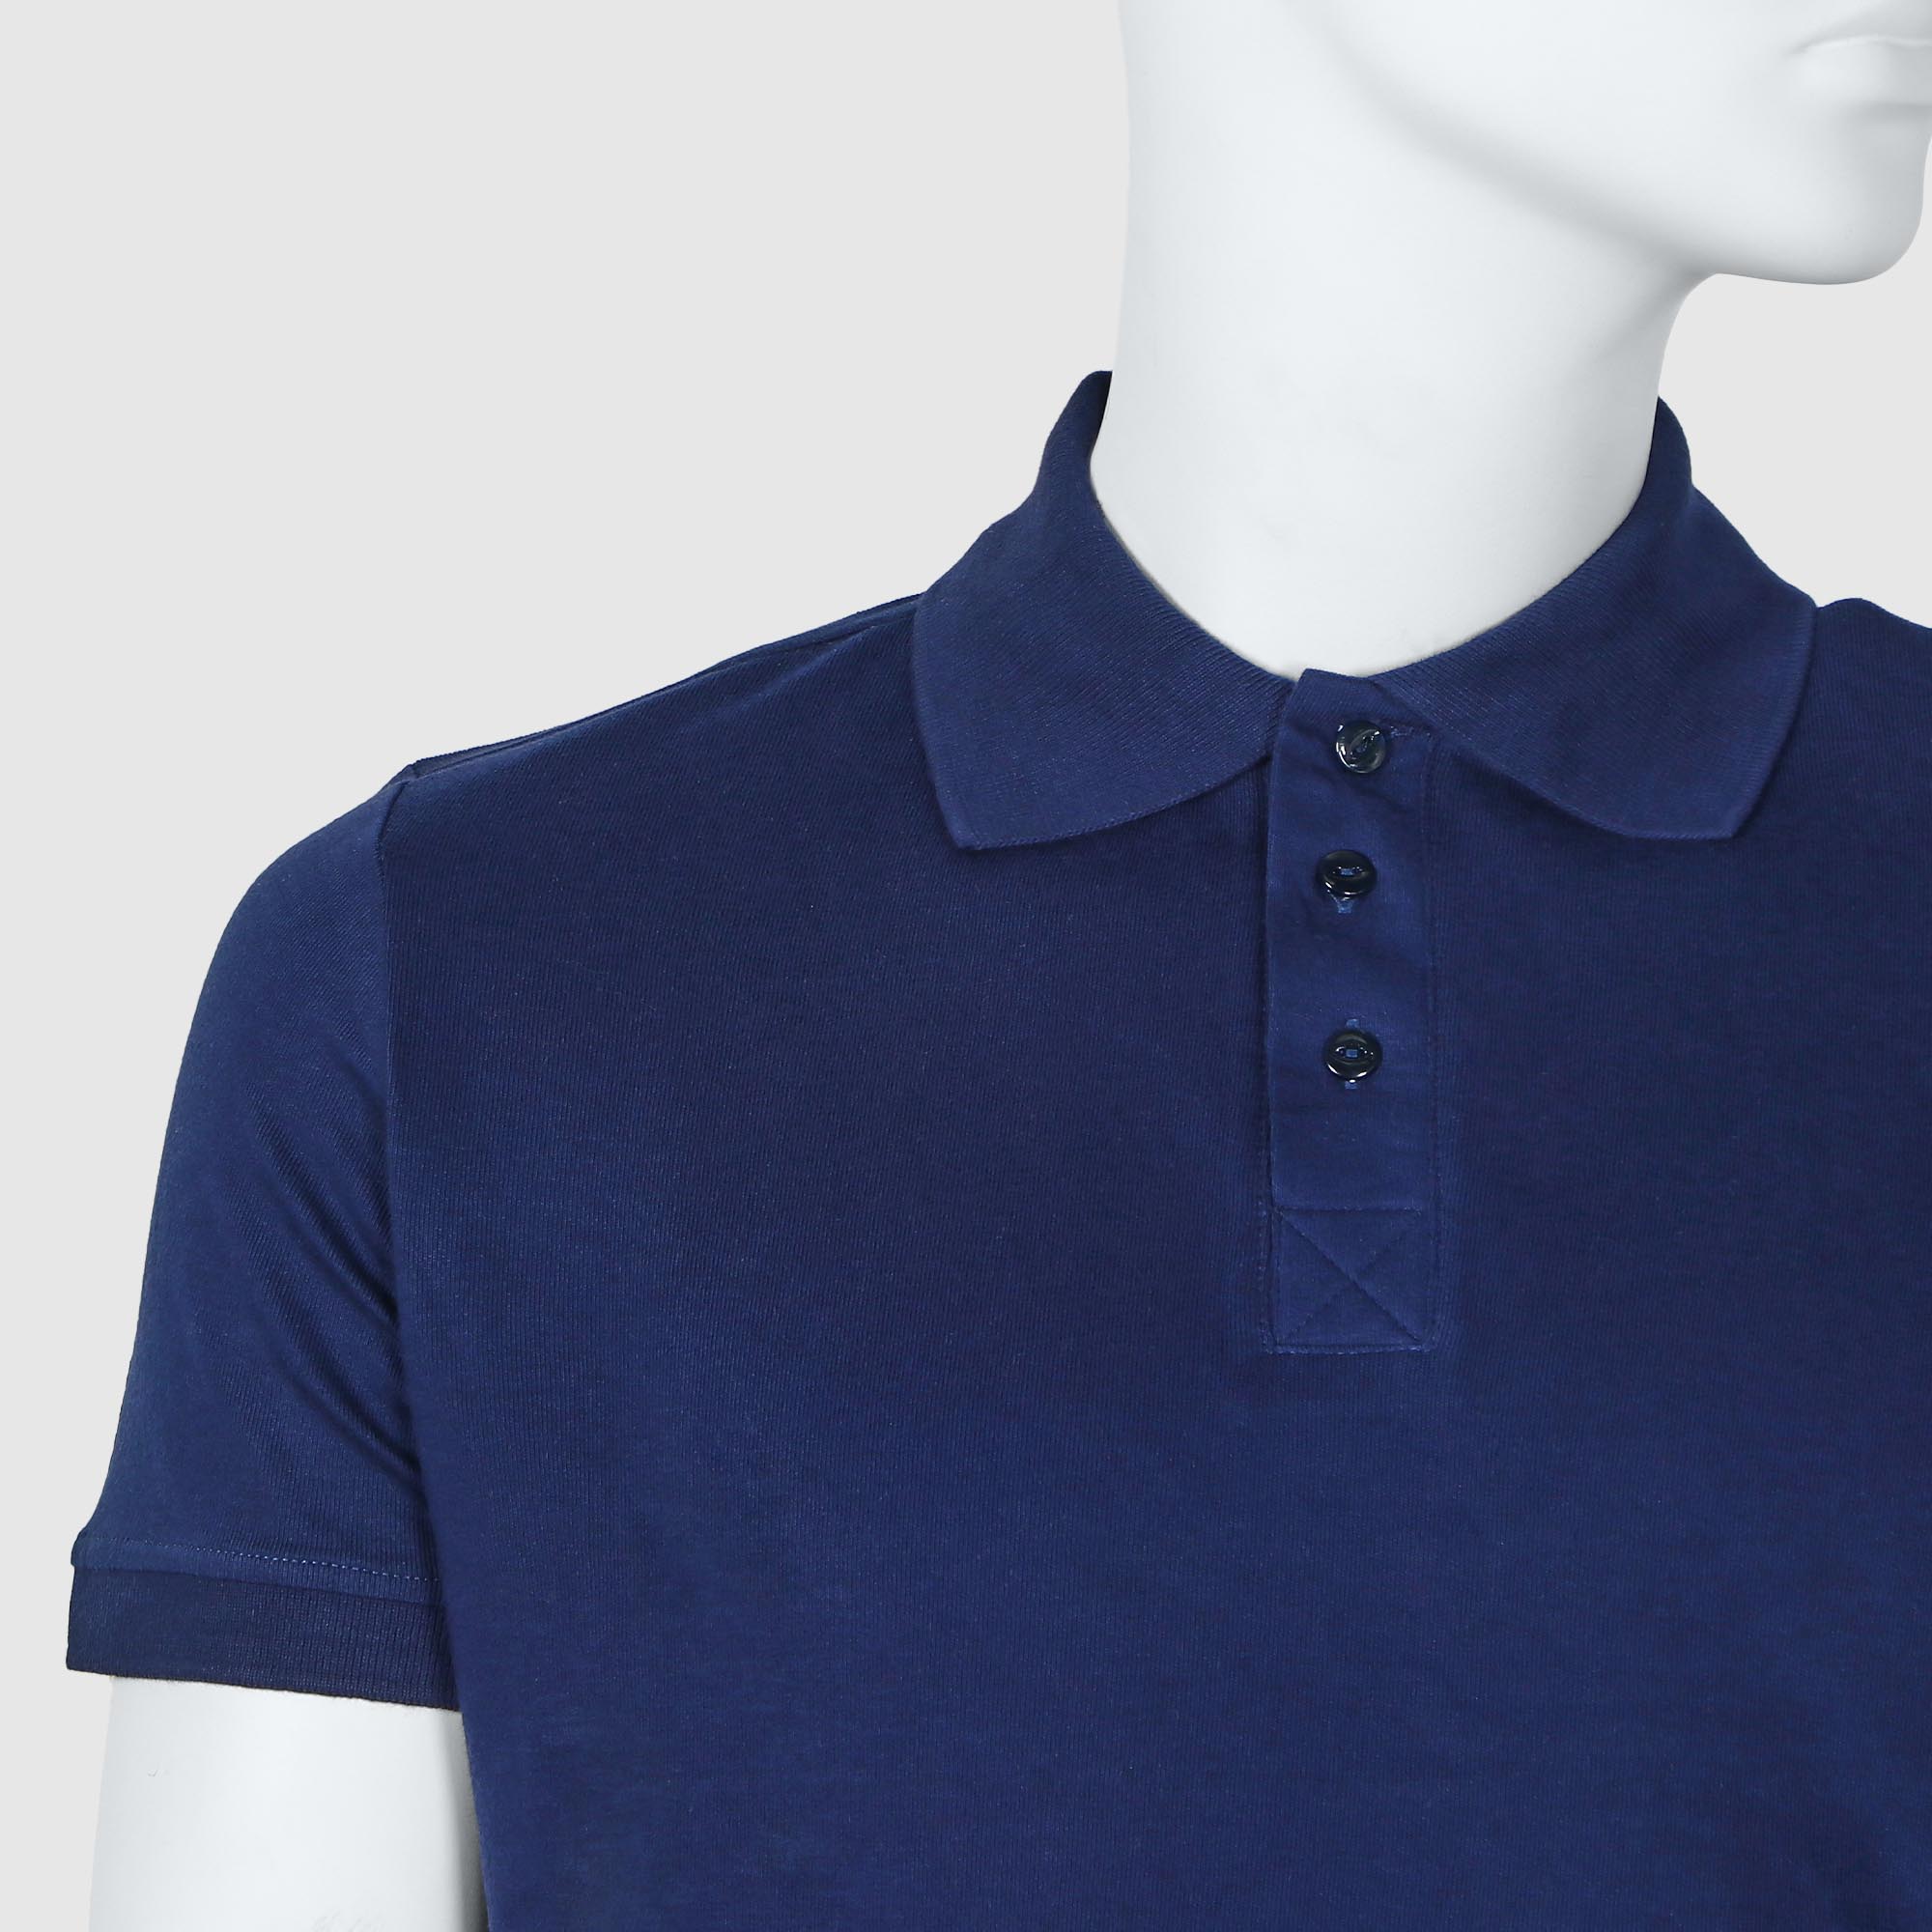 Мужская футболка-поло Diva Teks синяя (DTD-10), цвет синий, размер 44-46 - фото 3